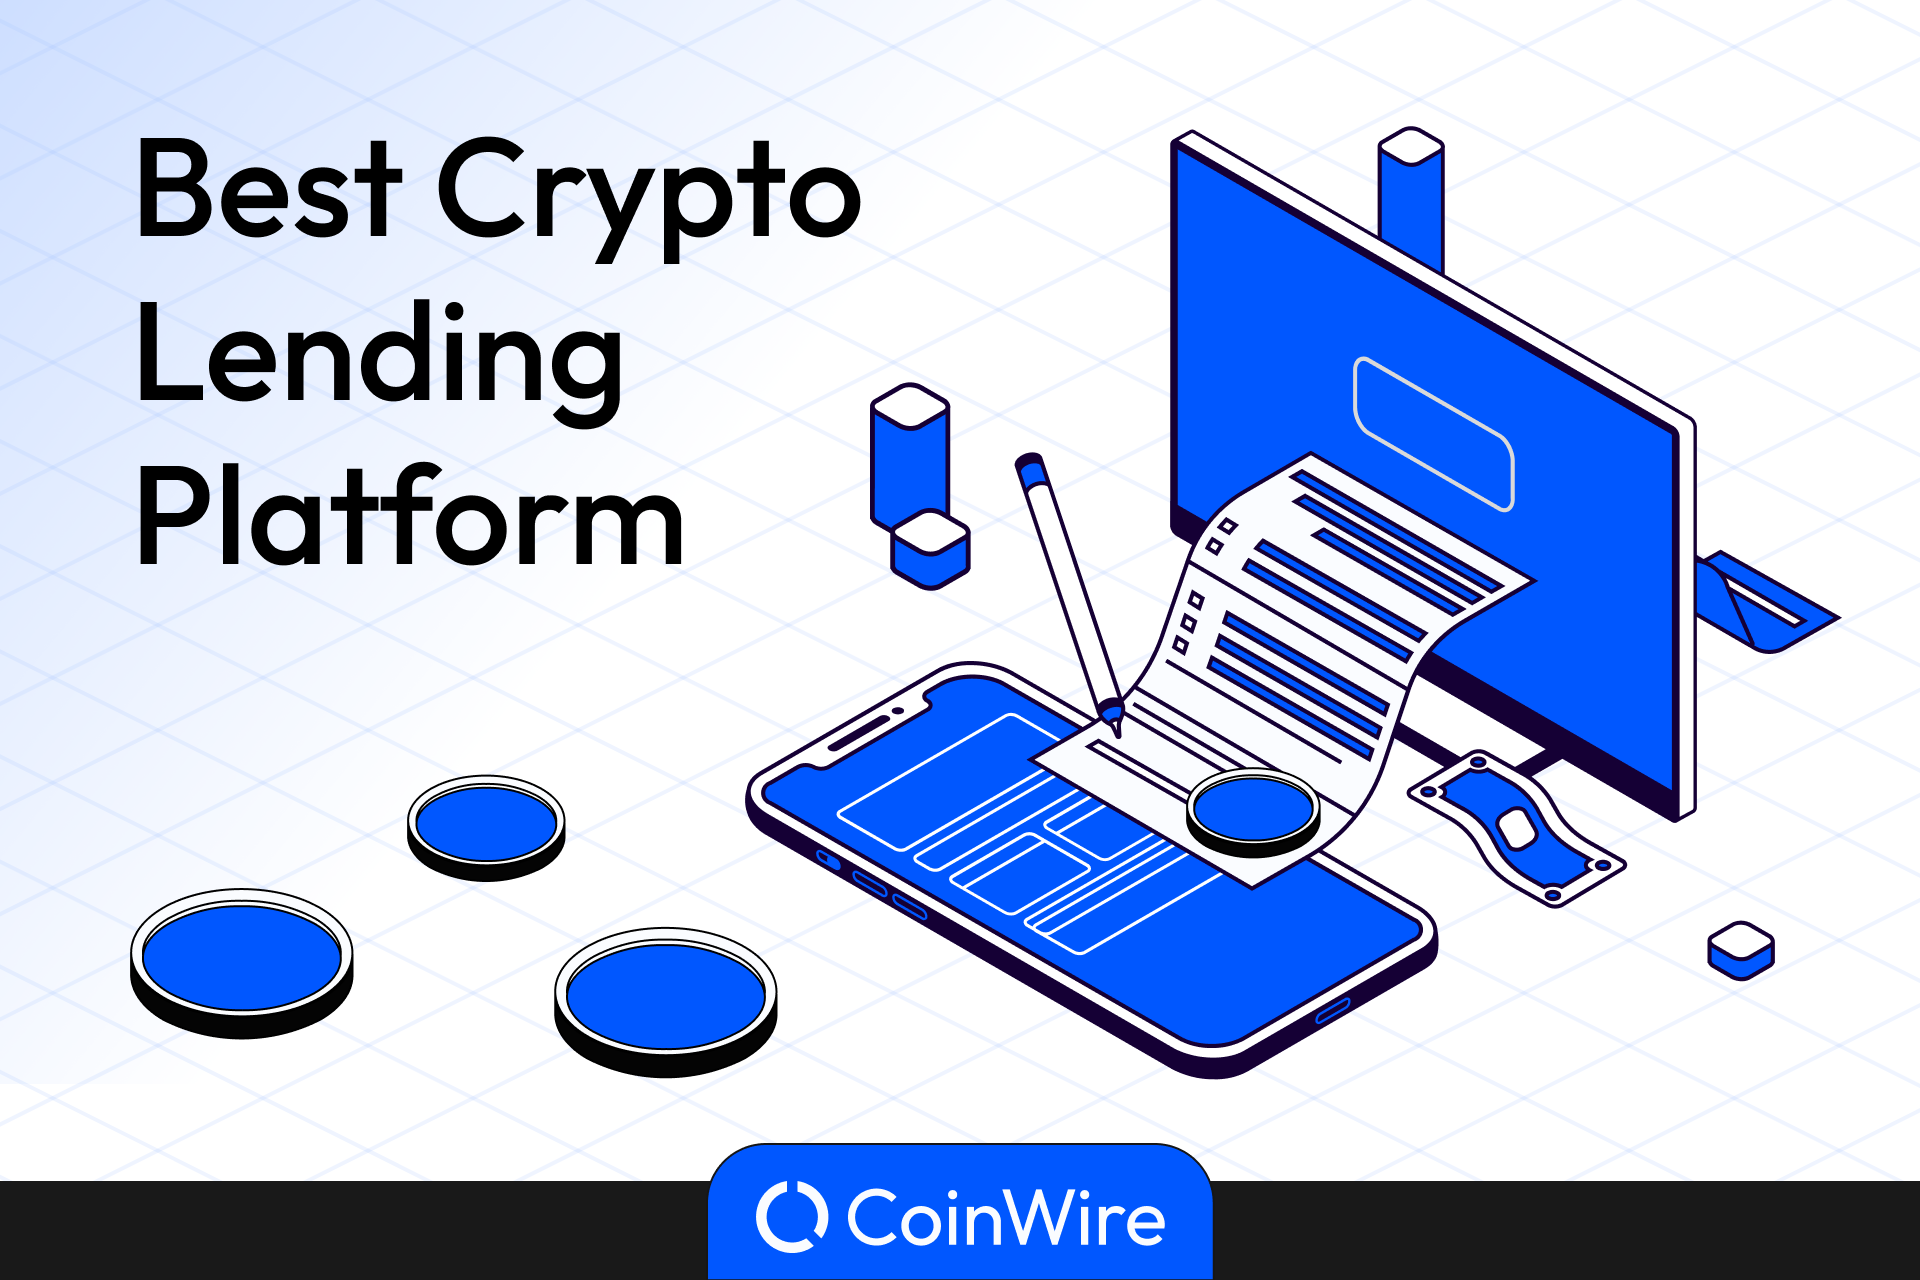 Best Crypto Lending Platform